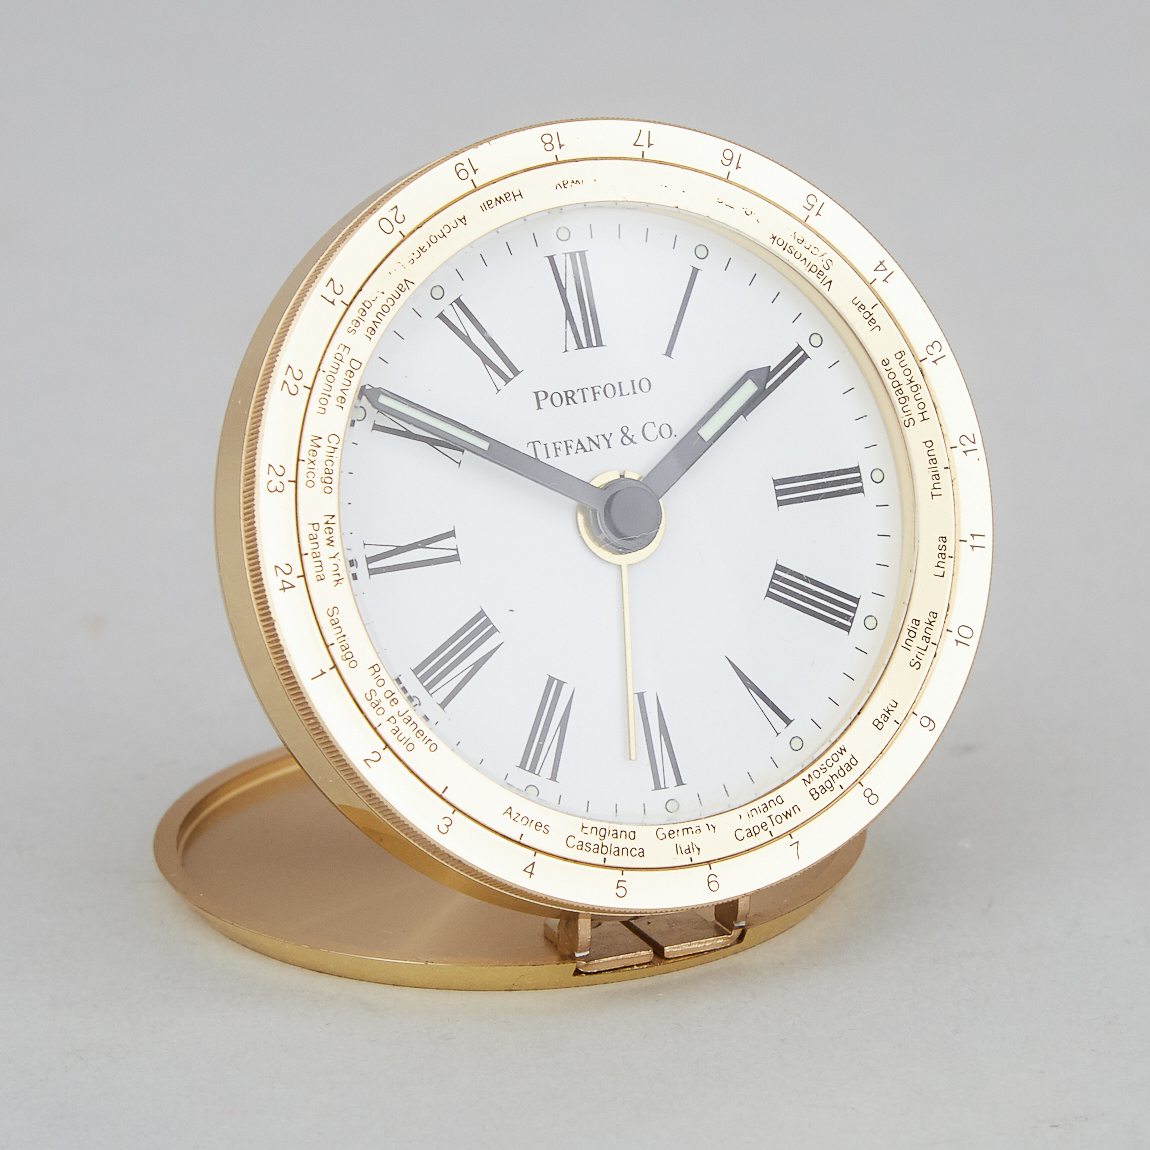 Tiffany & Co. 'Portfolio' German Travel Alarm Clock, 21st century